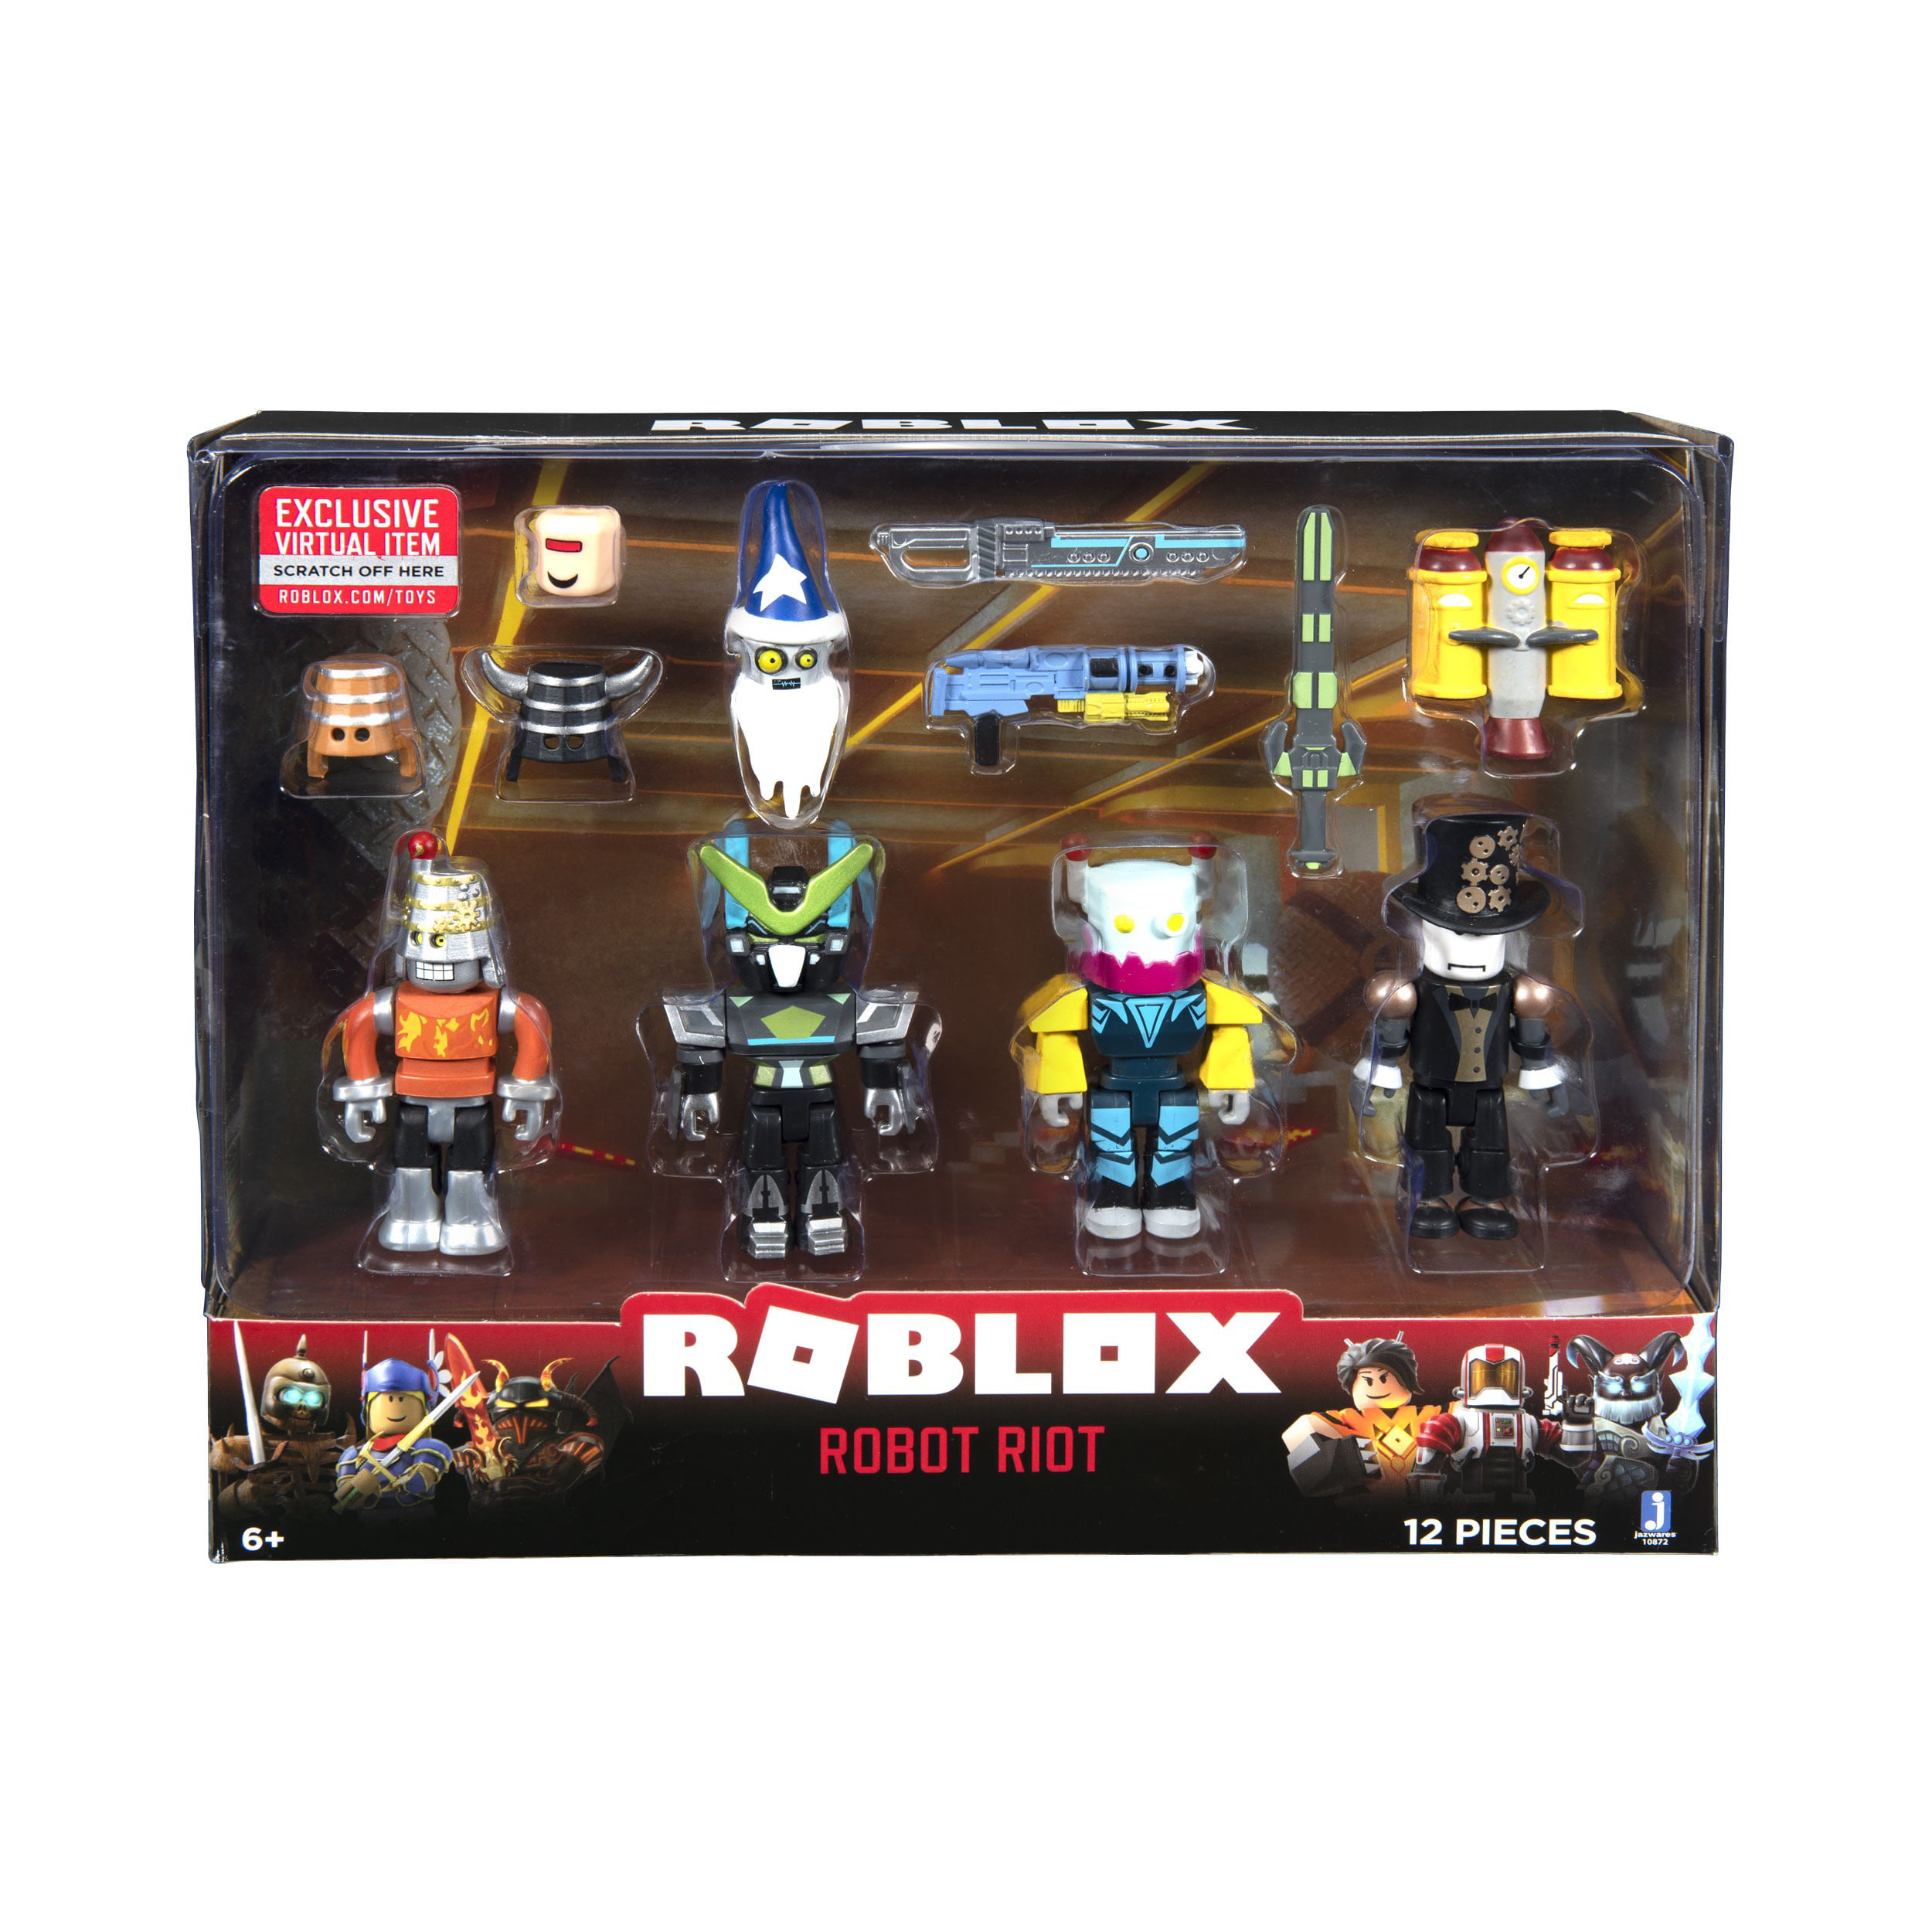 Roblox Action Collection Robot Riot Four Figure Pack Includes Exclusive Virtual Item Walmart Com Walmart Com - iron man gear roblox